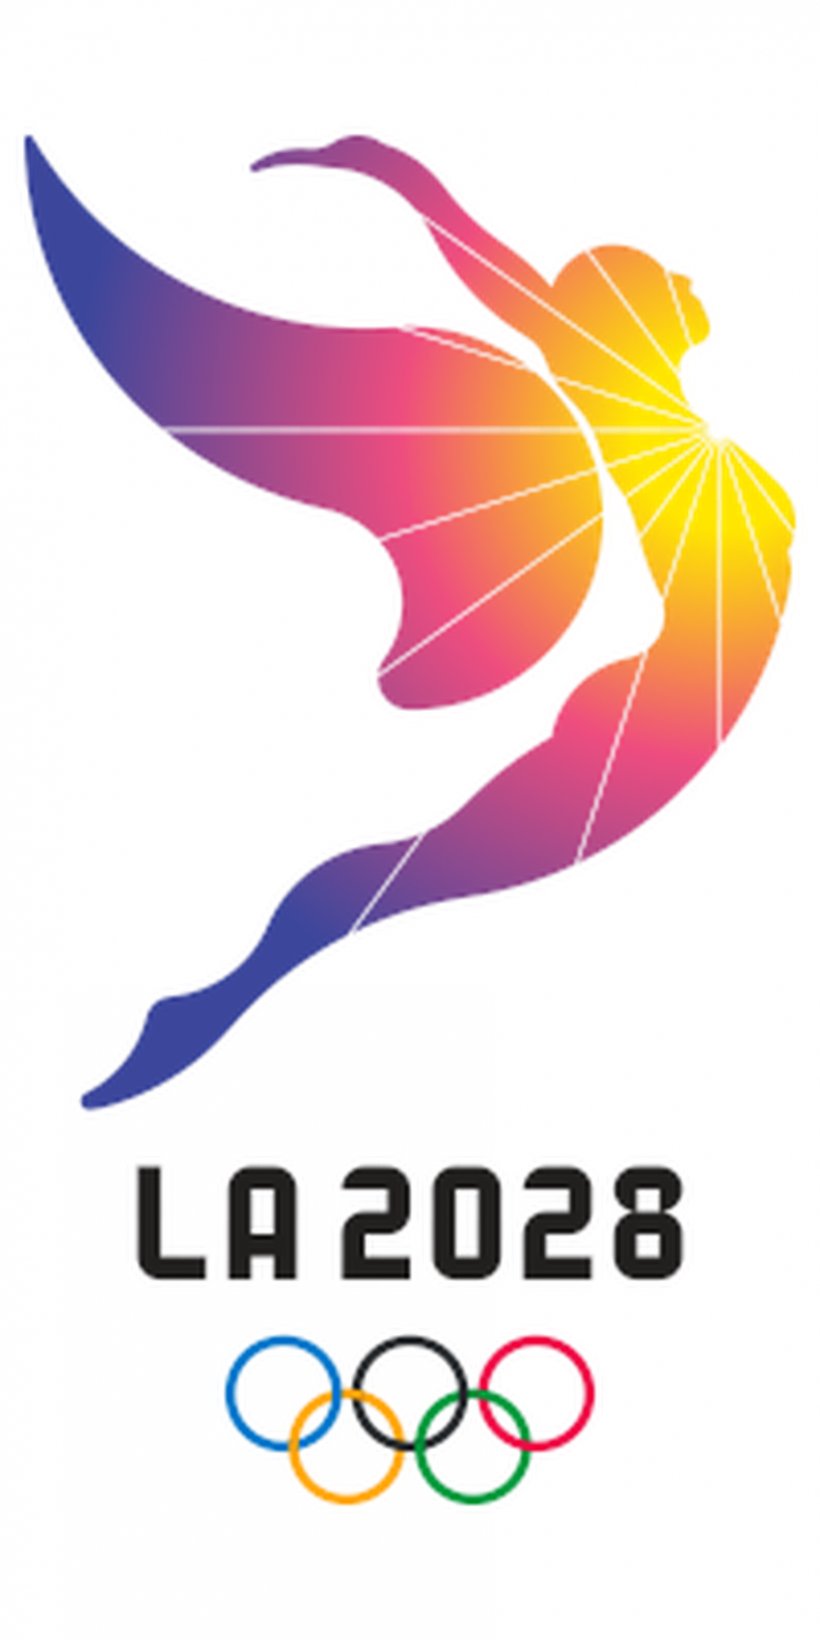 Los Angeles 2020 Summer Olympics 2028 Summer Olympics Olympic Games